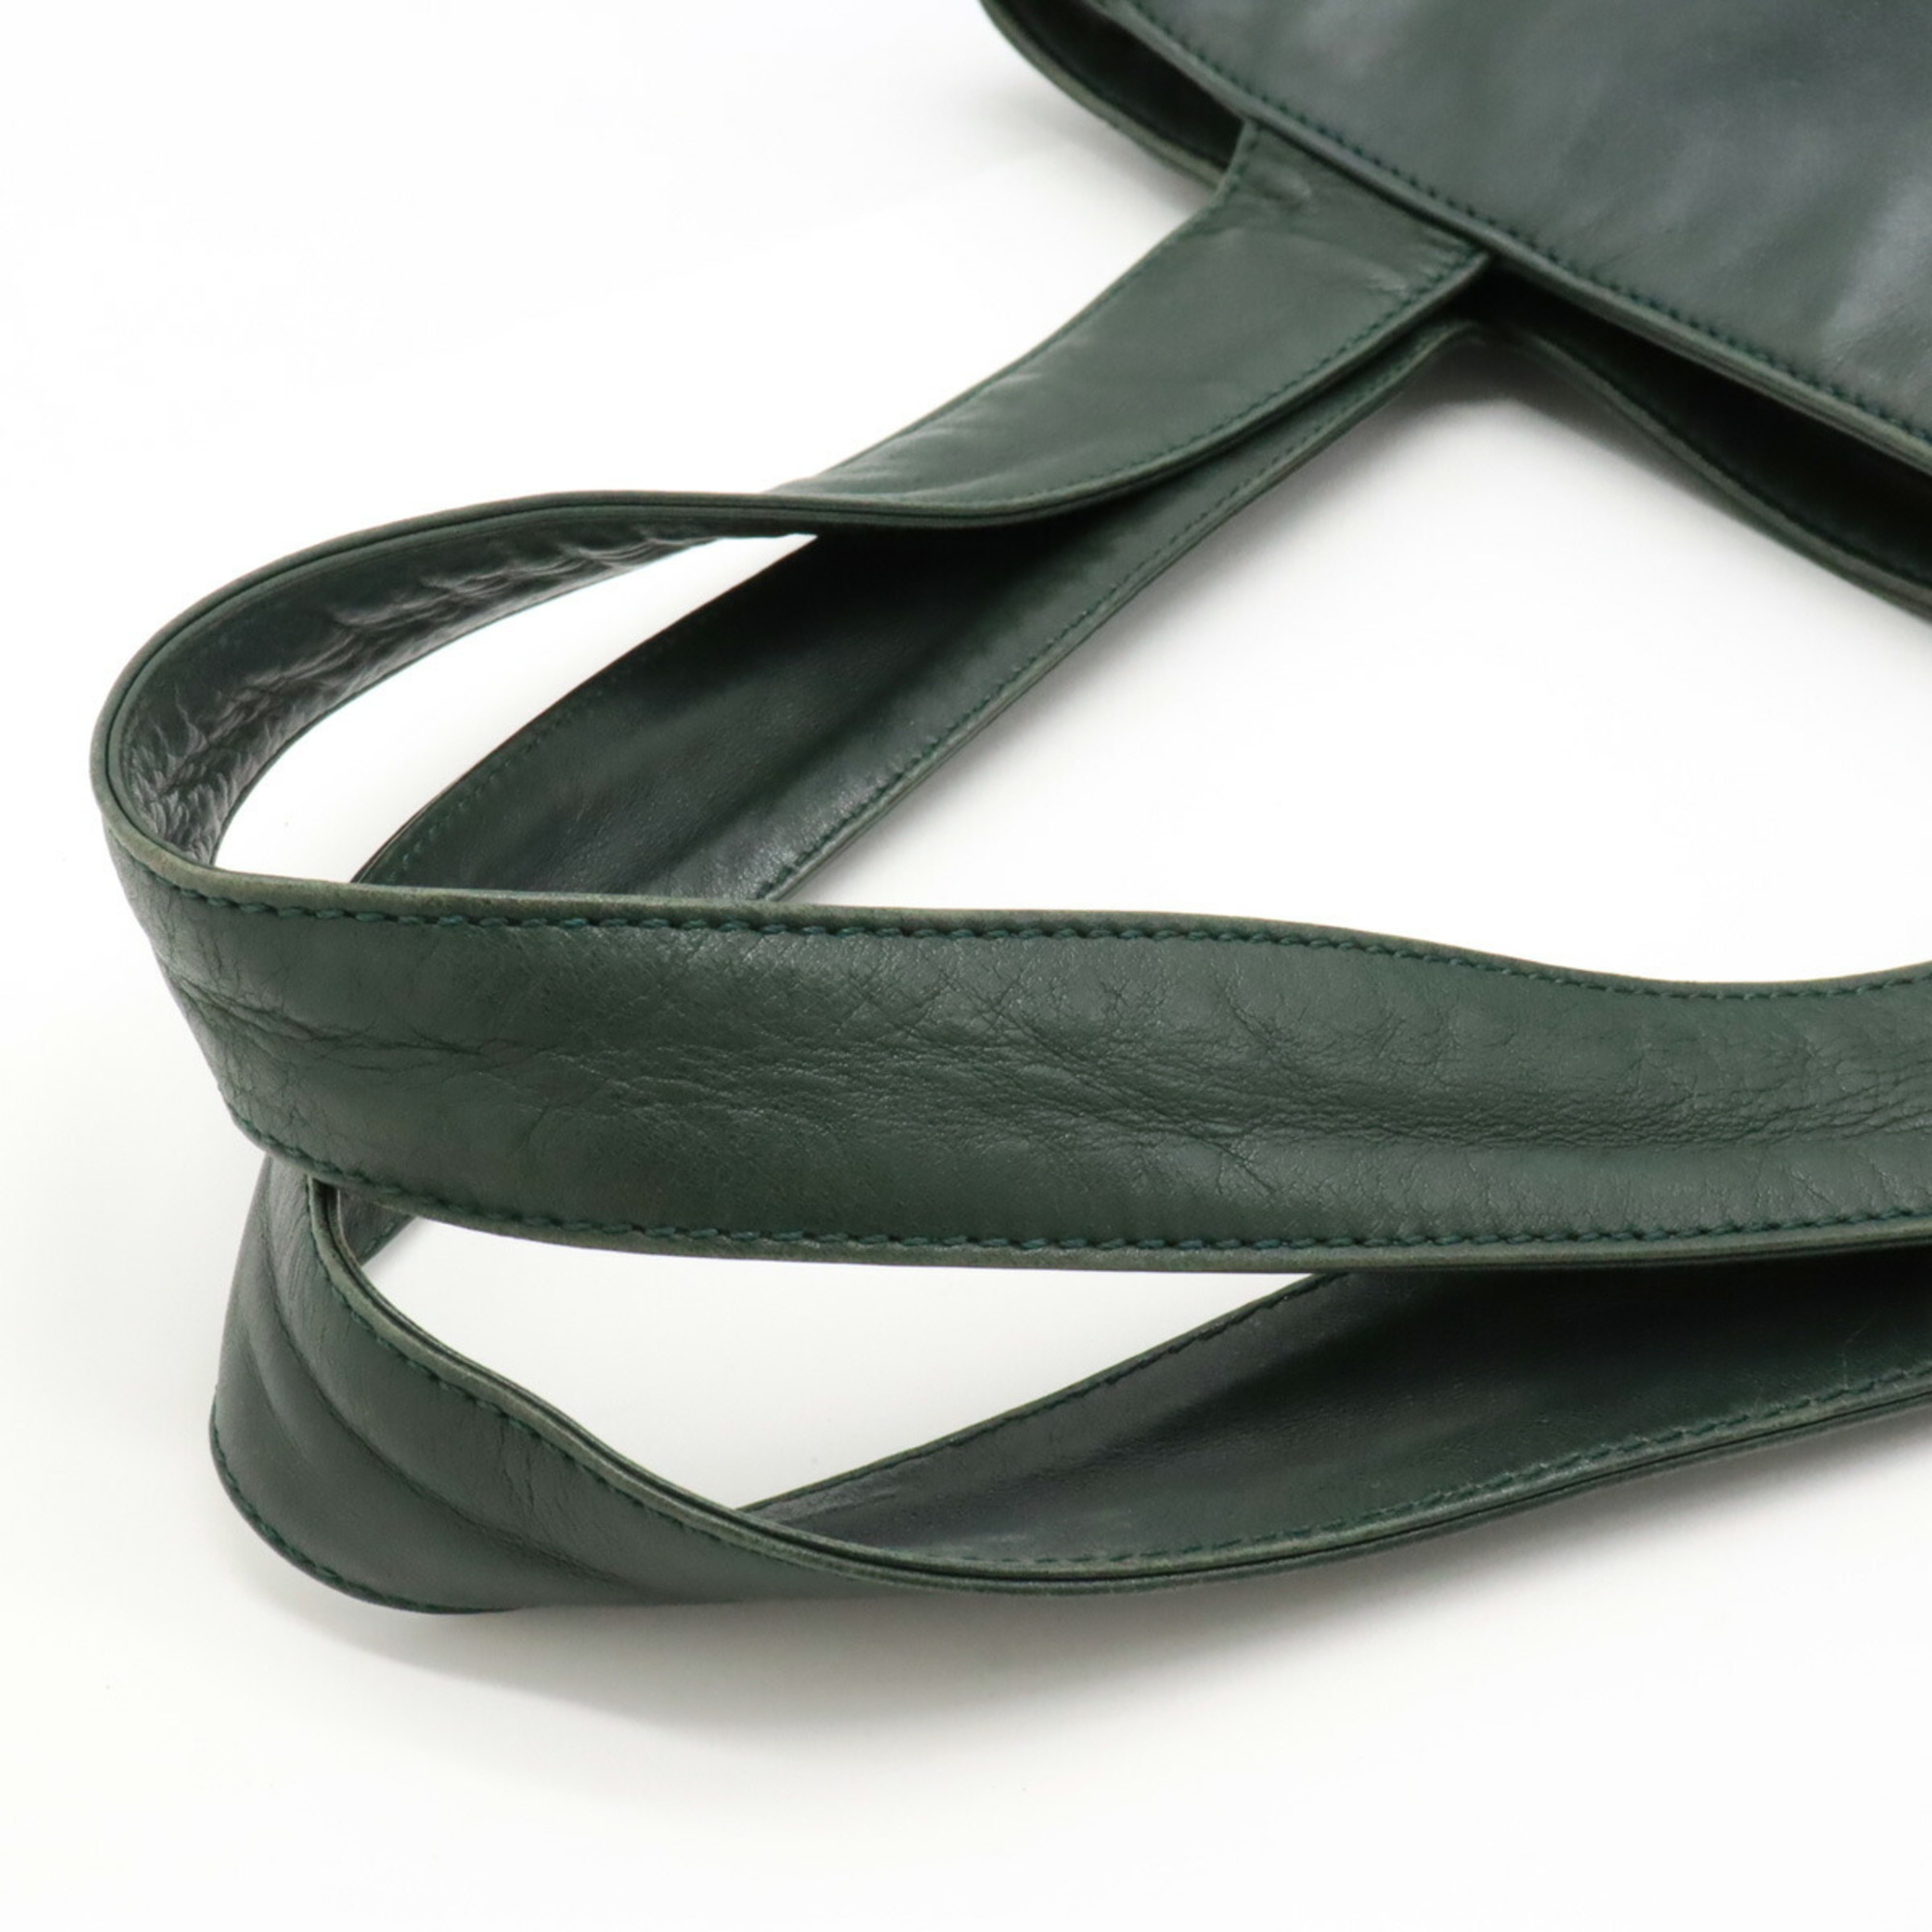 CHANEL Coco Mark Tassel Tote Bag Shoulder Leather Dark Green